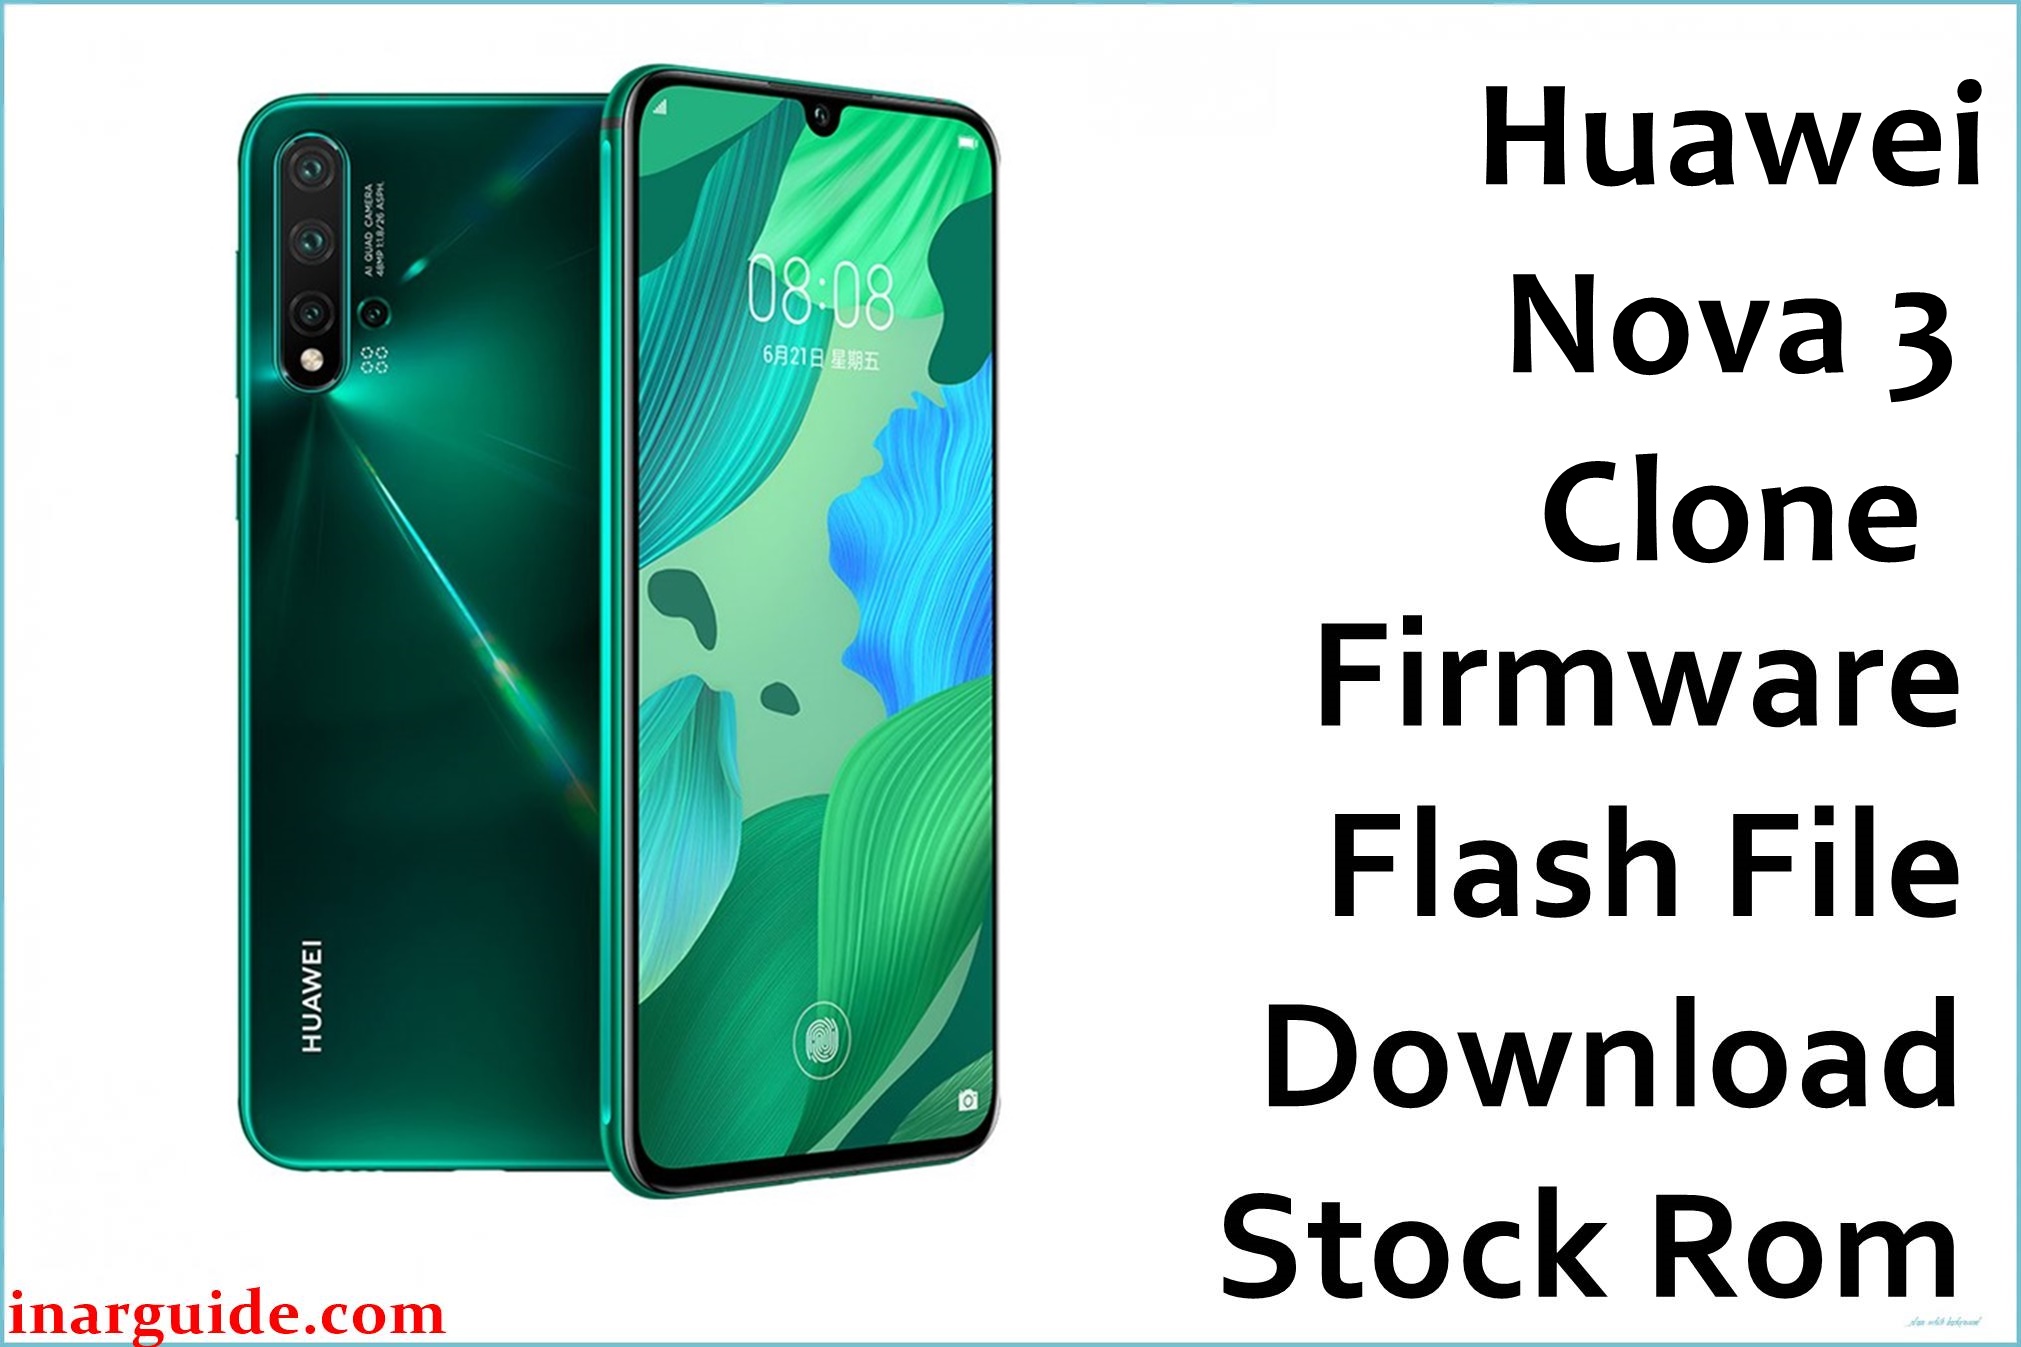 Huawei Nova 3 Clone